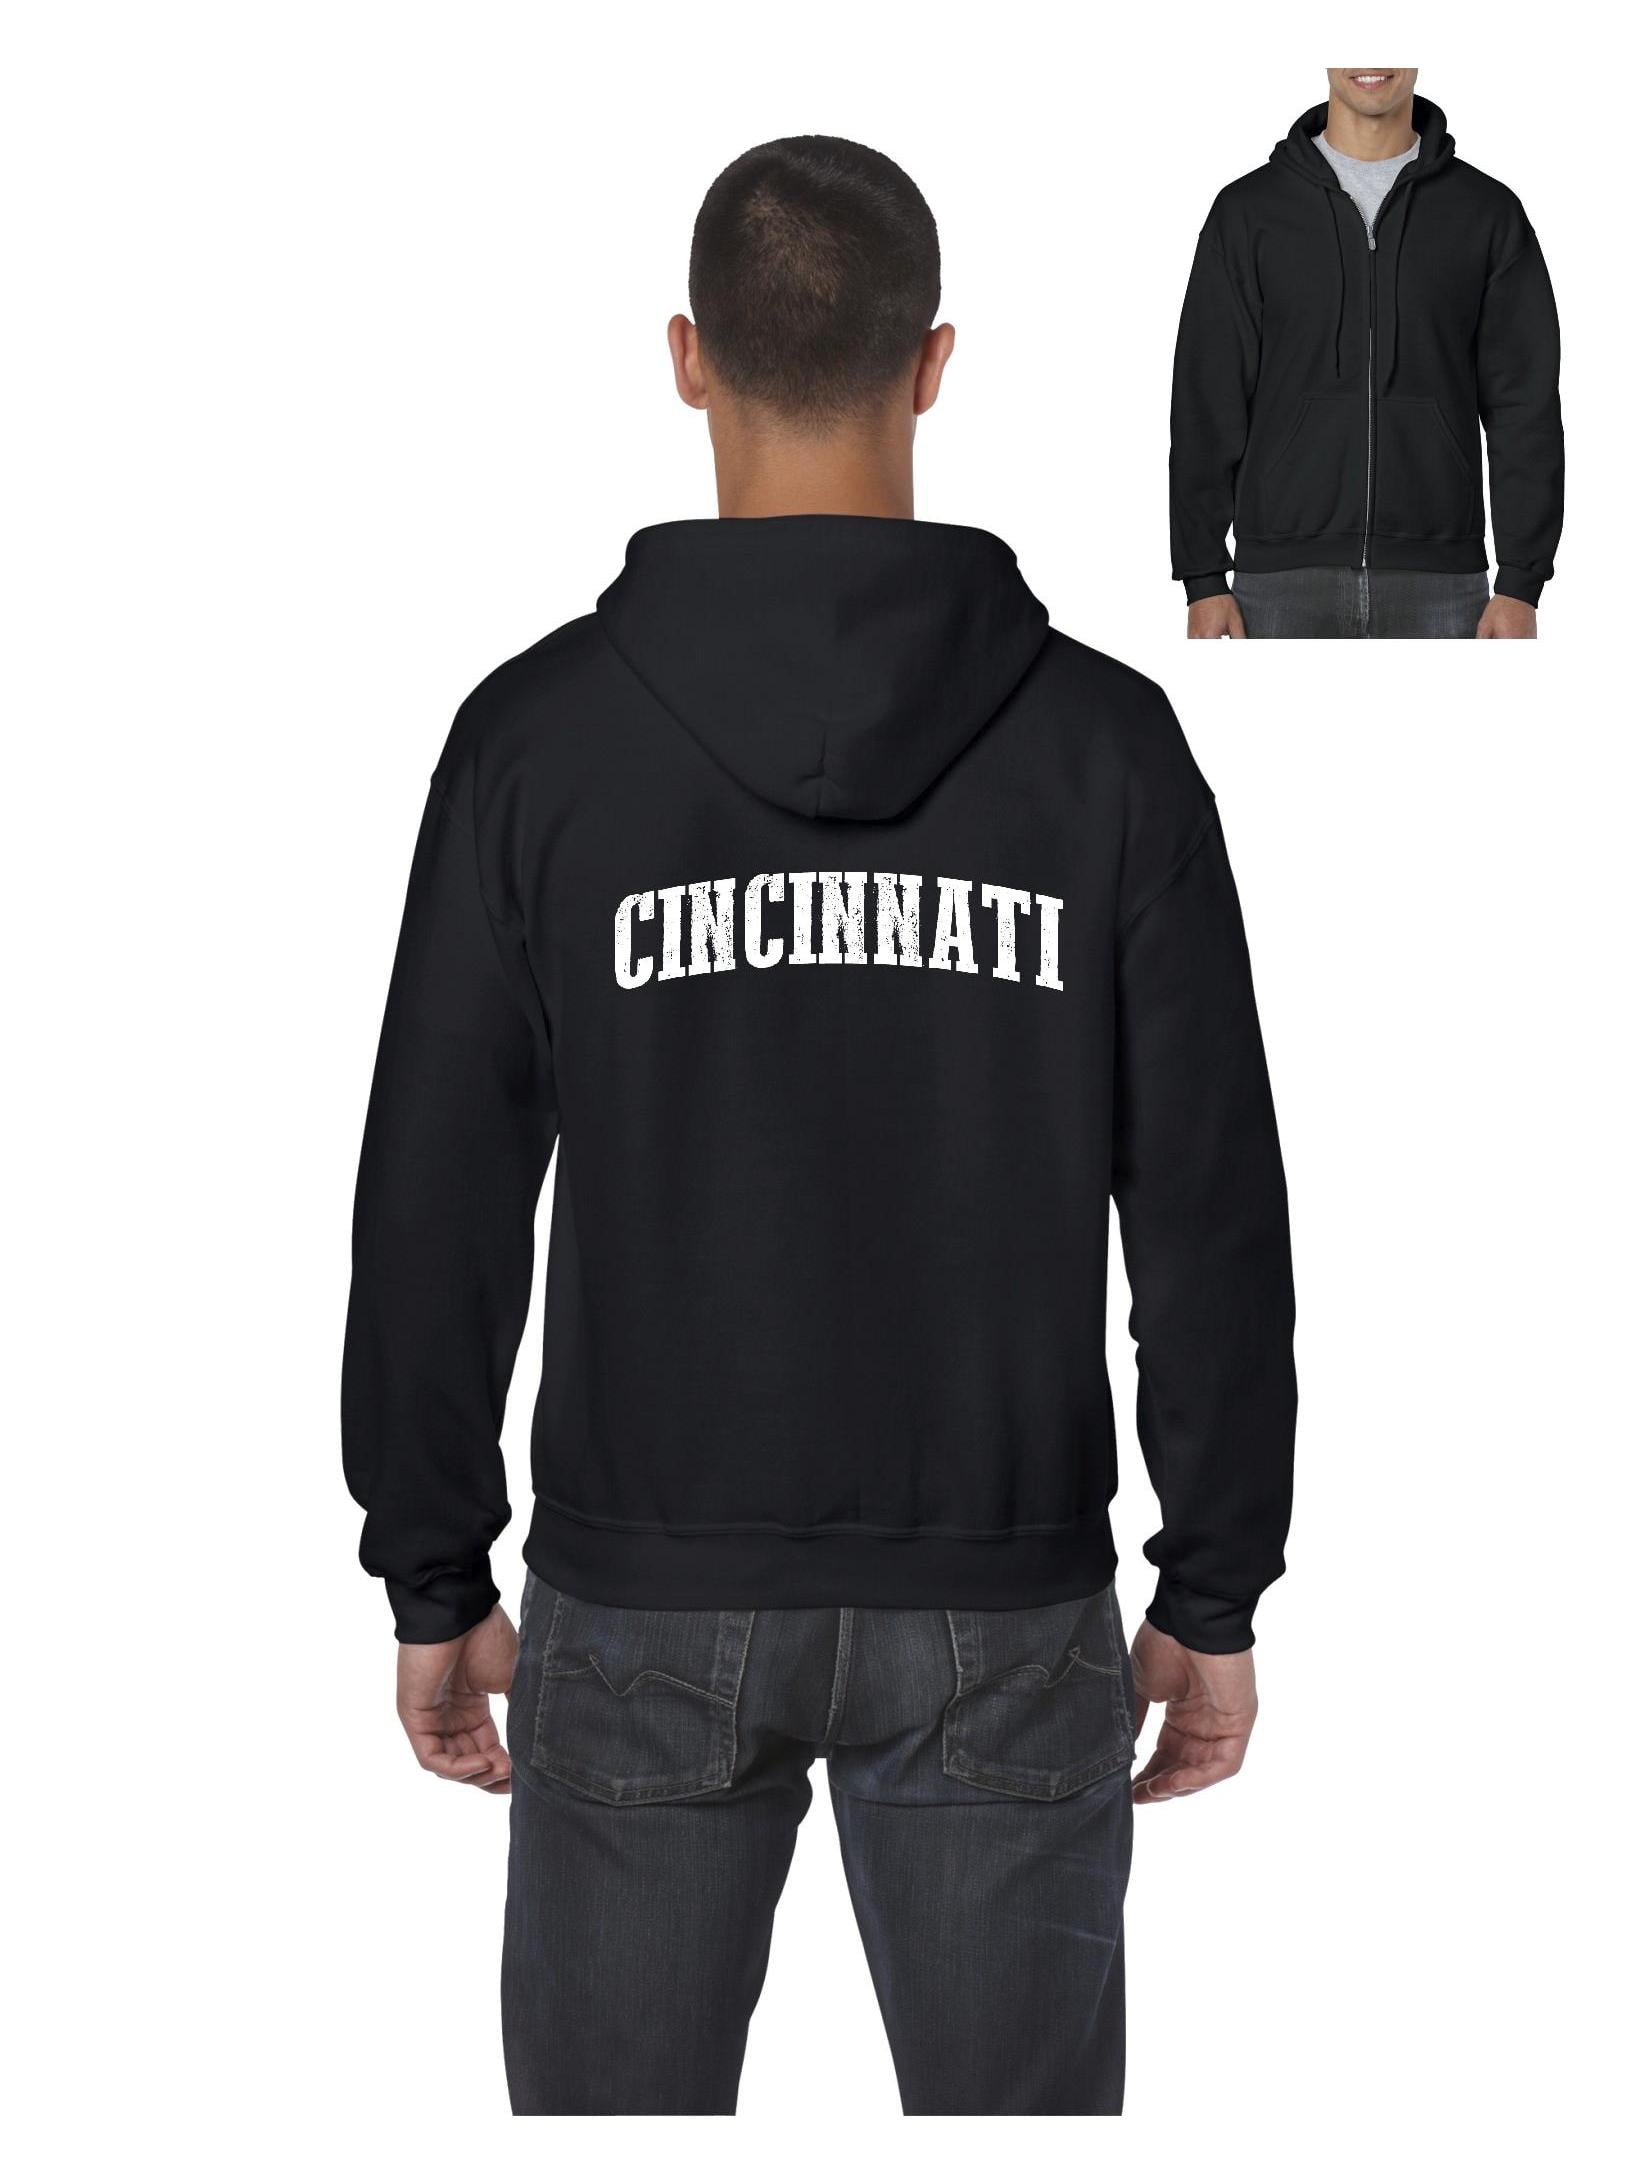 Flag of Cincinnati Hoodie Mens Casual Workout Full Zip Sweatshirts Jackets Outwear with Plus Size